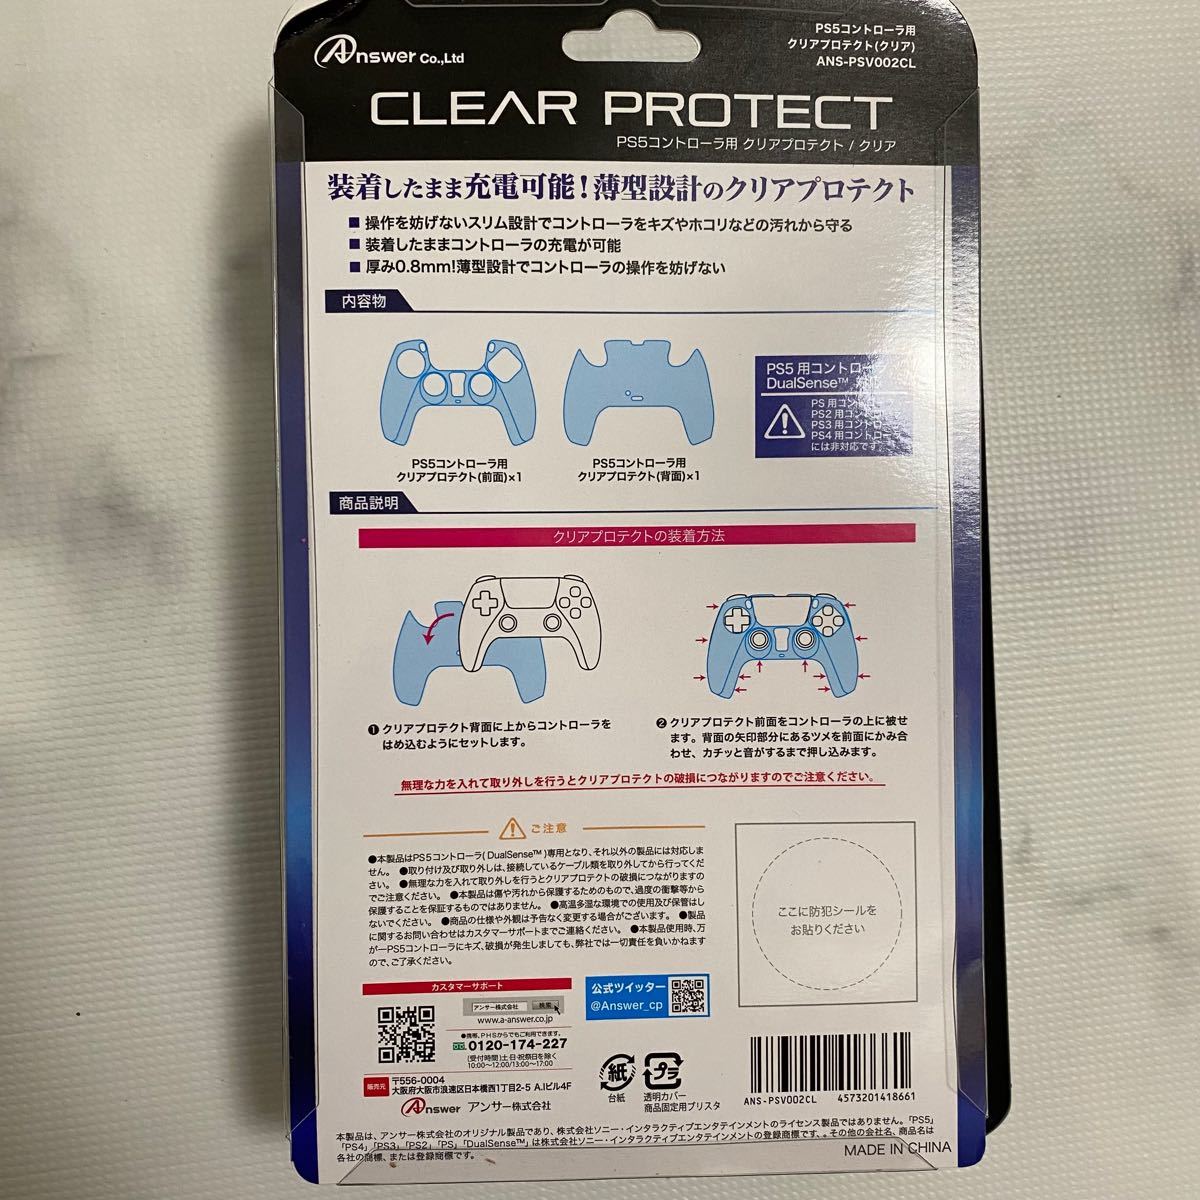 PS5コントローラ用 クリアプロテクト(クリア) 任天堂 Nintendo ワイヤレスコントローラ